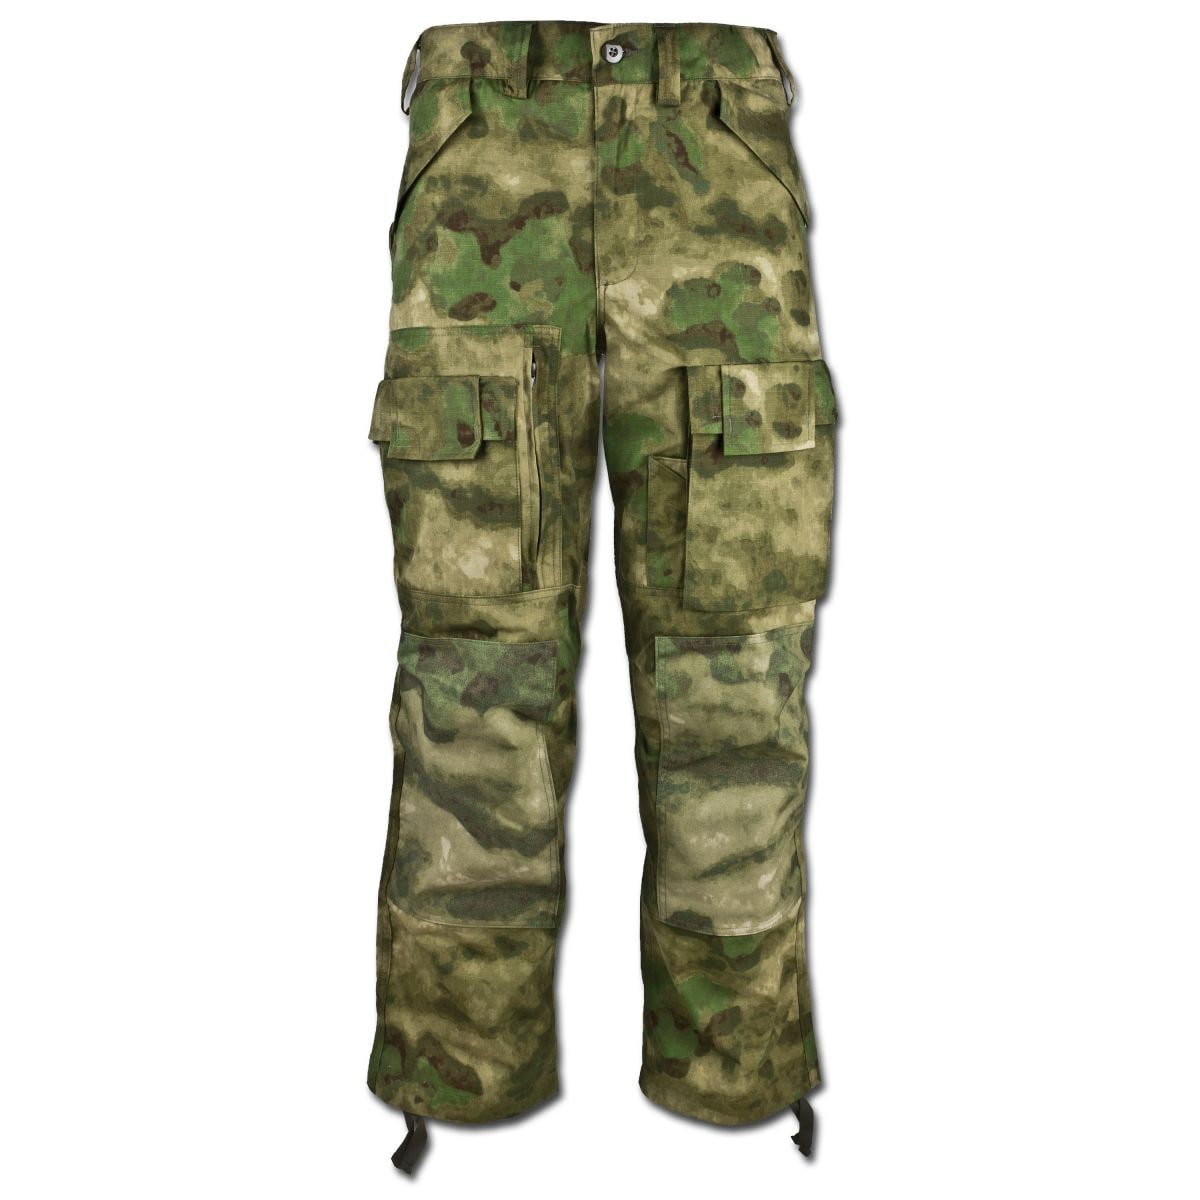 Purchase the Leo Köhler Combat Pants A-Tacs FG by ASMC